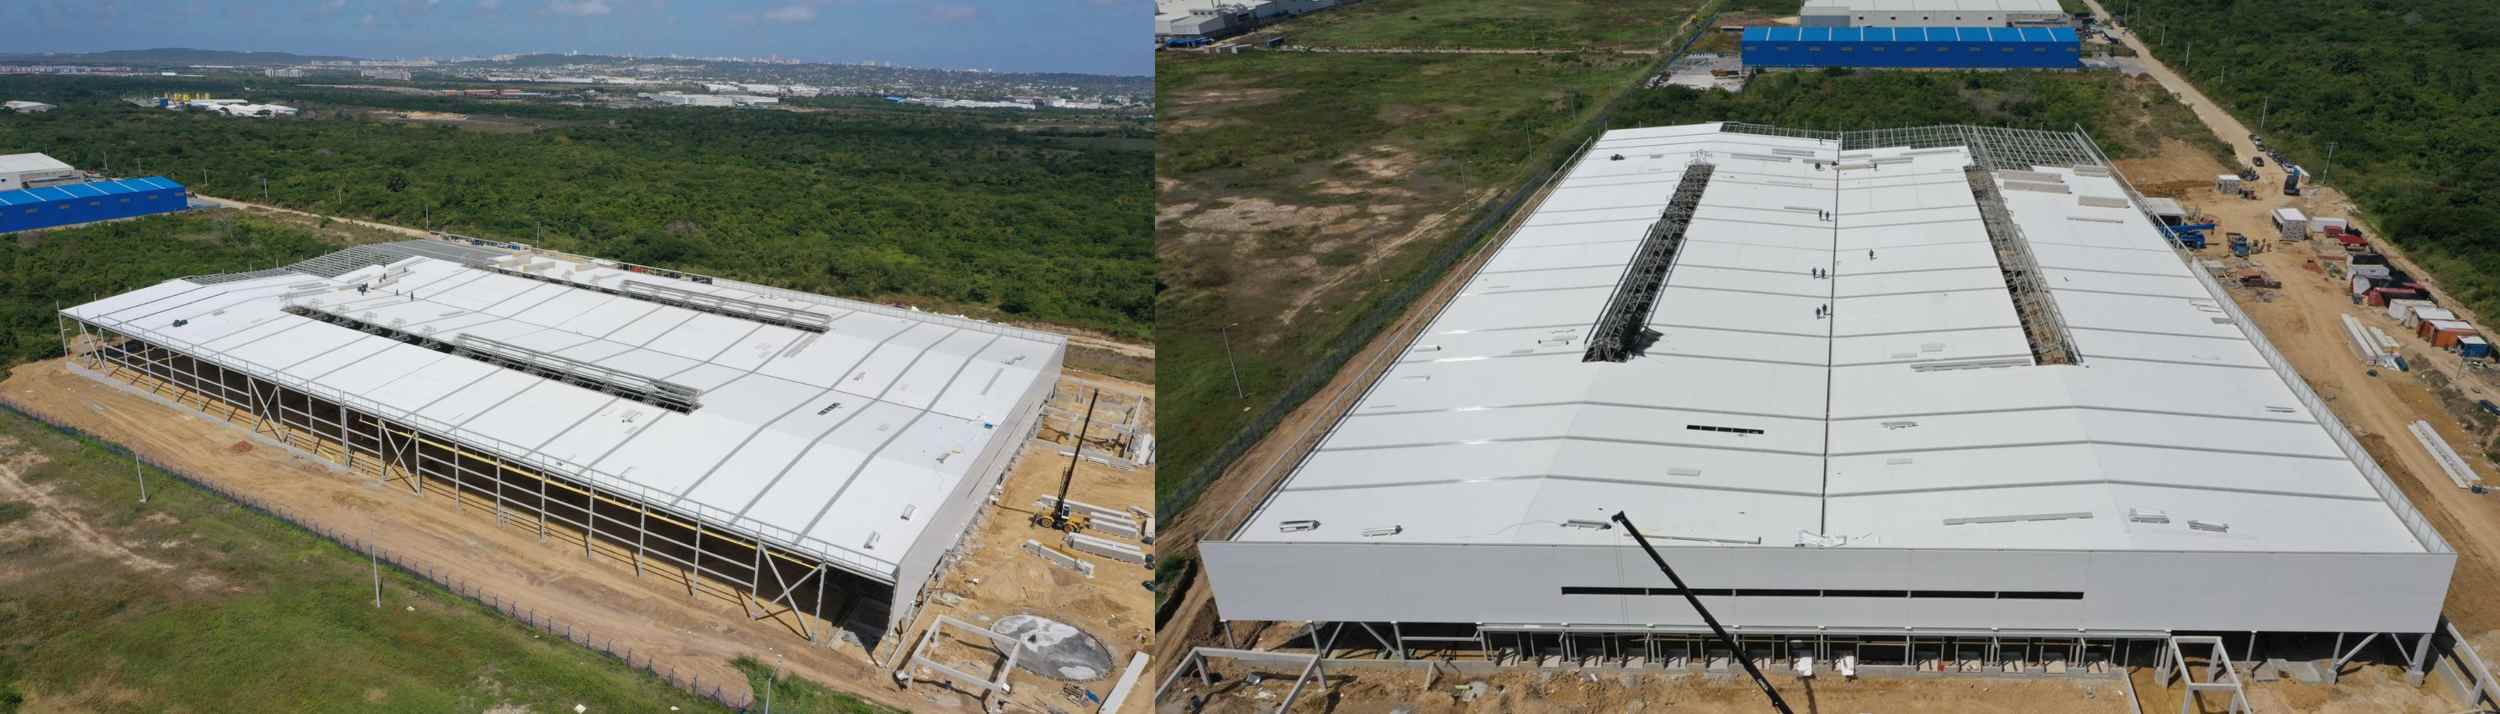 CEDI Distribution Center Barranquilla